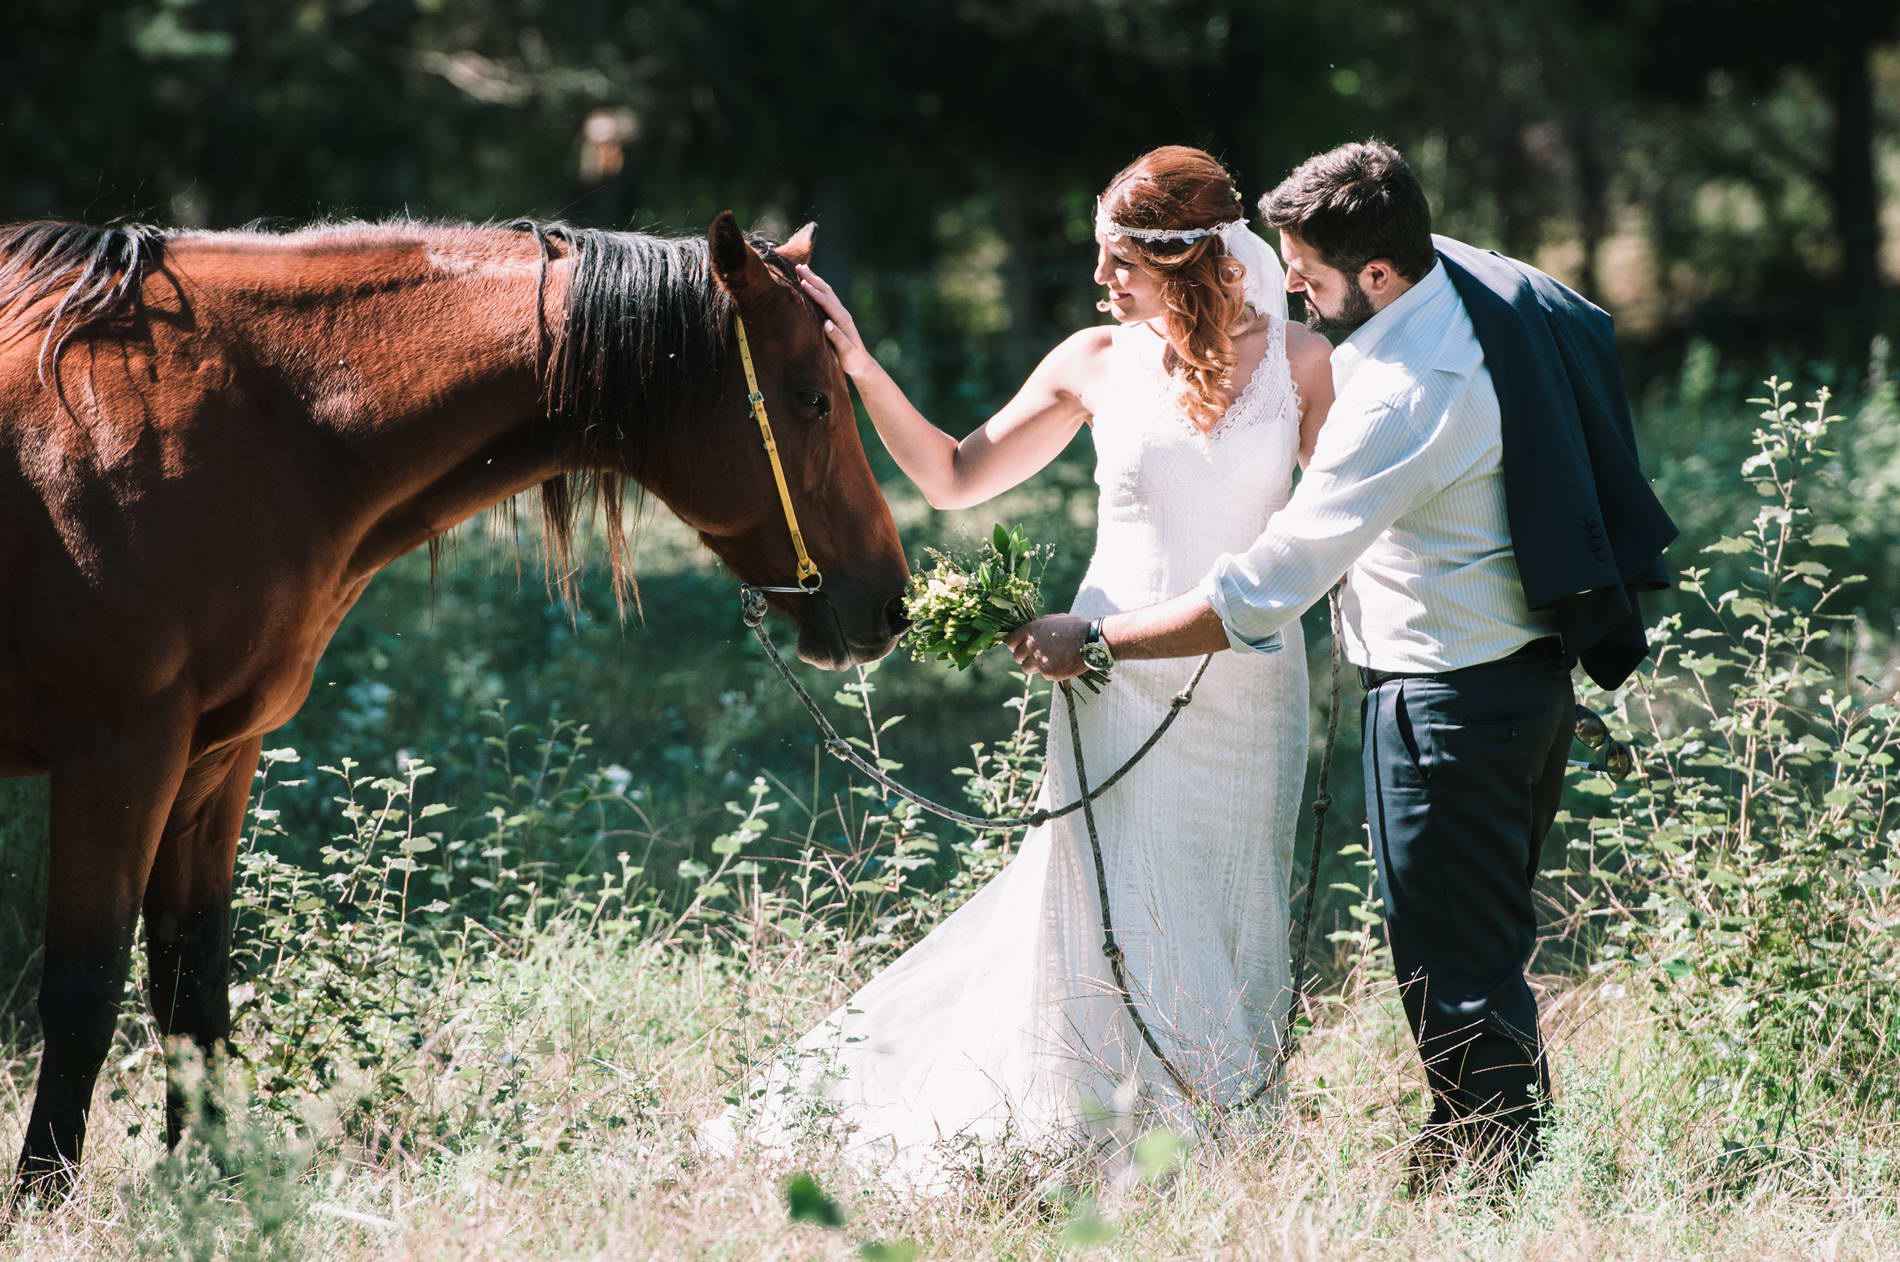 Next day φωτογράφηση γάμου στο δάσος με άλογo και ανθοδέσμη